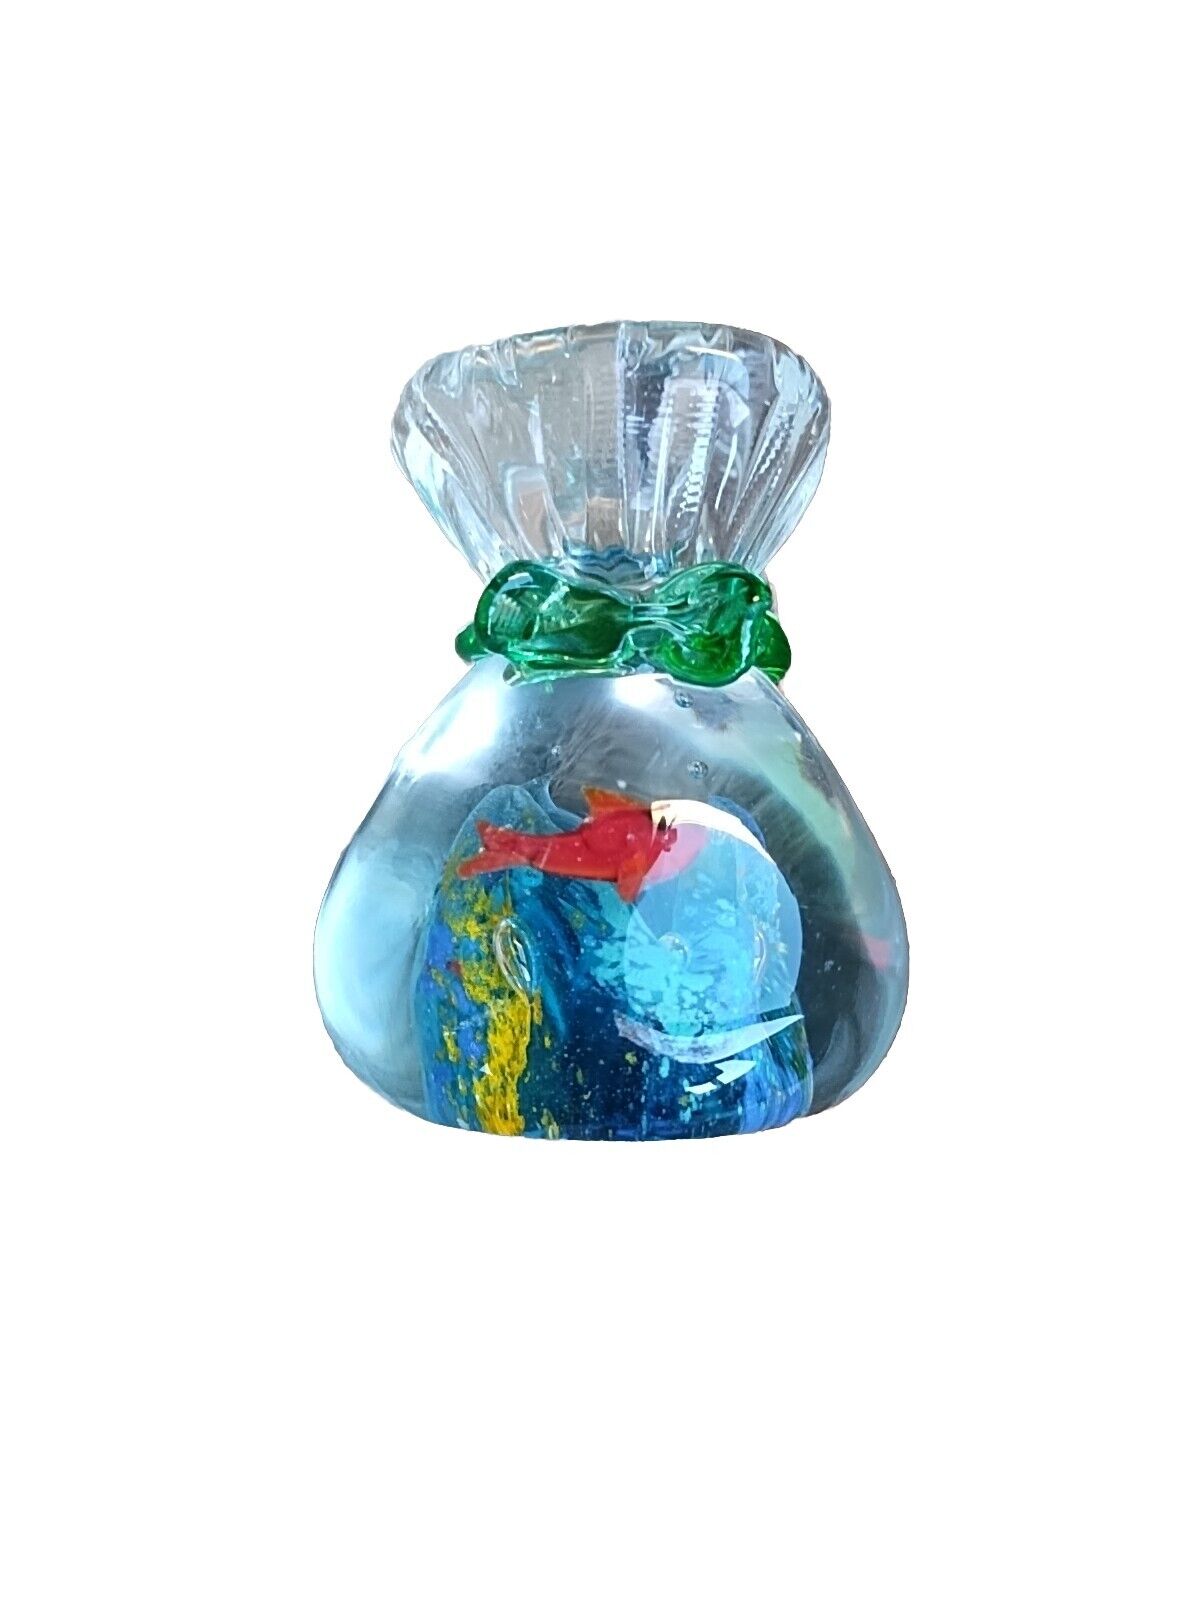 Vintage  Murano glass paperweight, Fish in Bag, Formia Vetri di Murano Italy